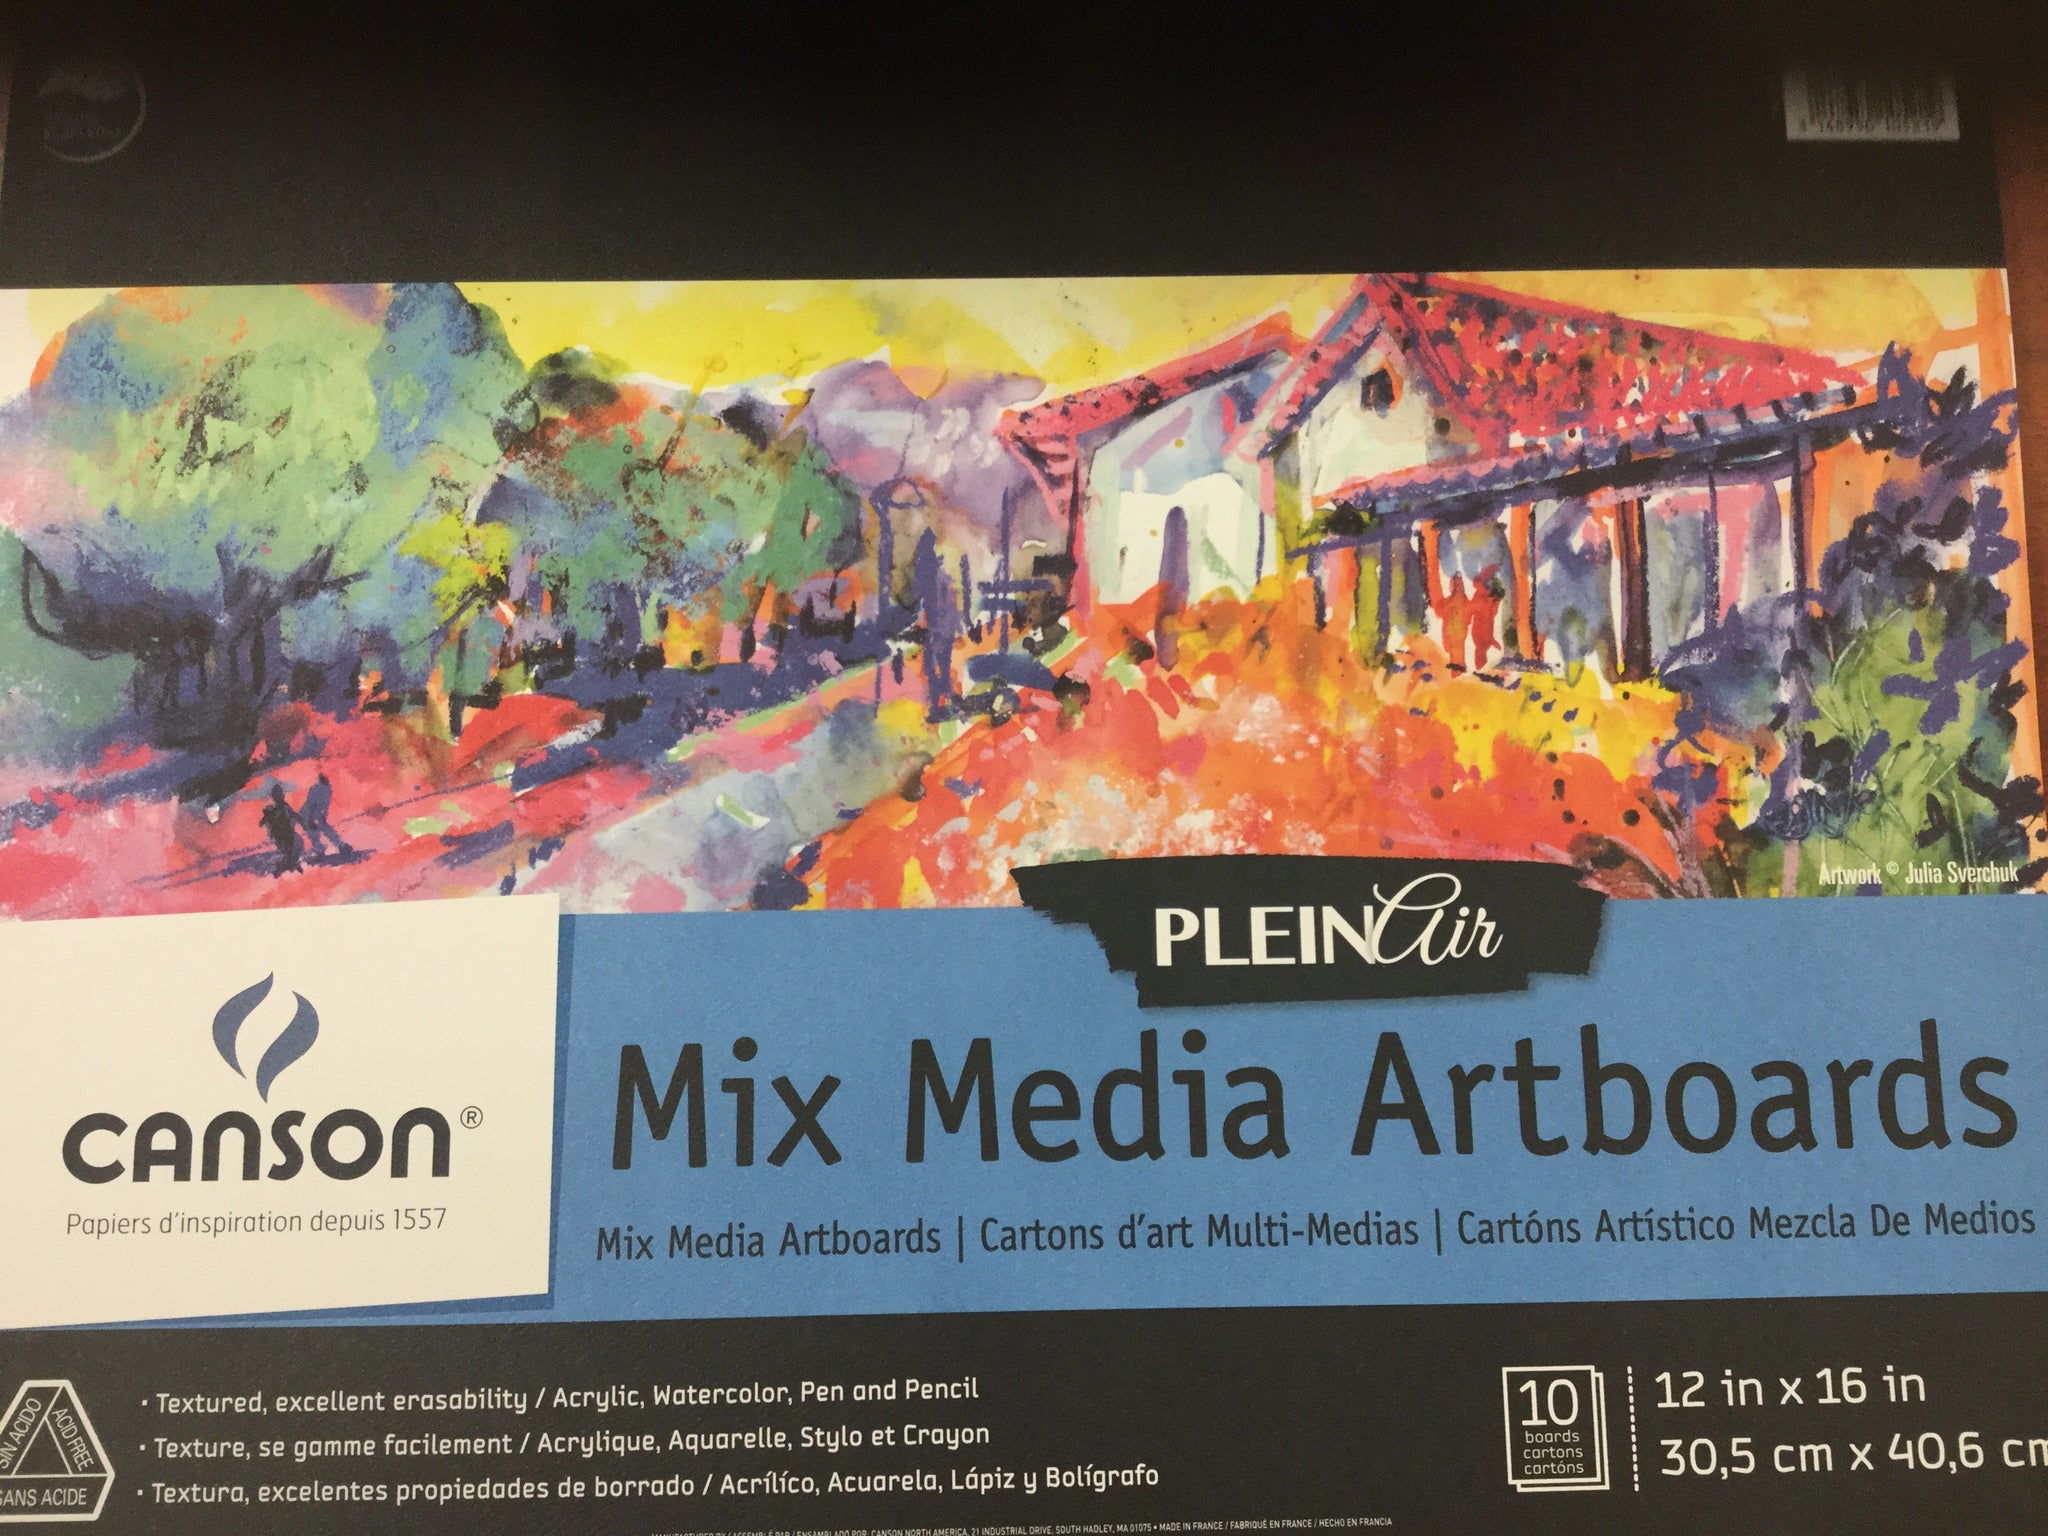 Canson - Mix Media Artboards